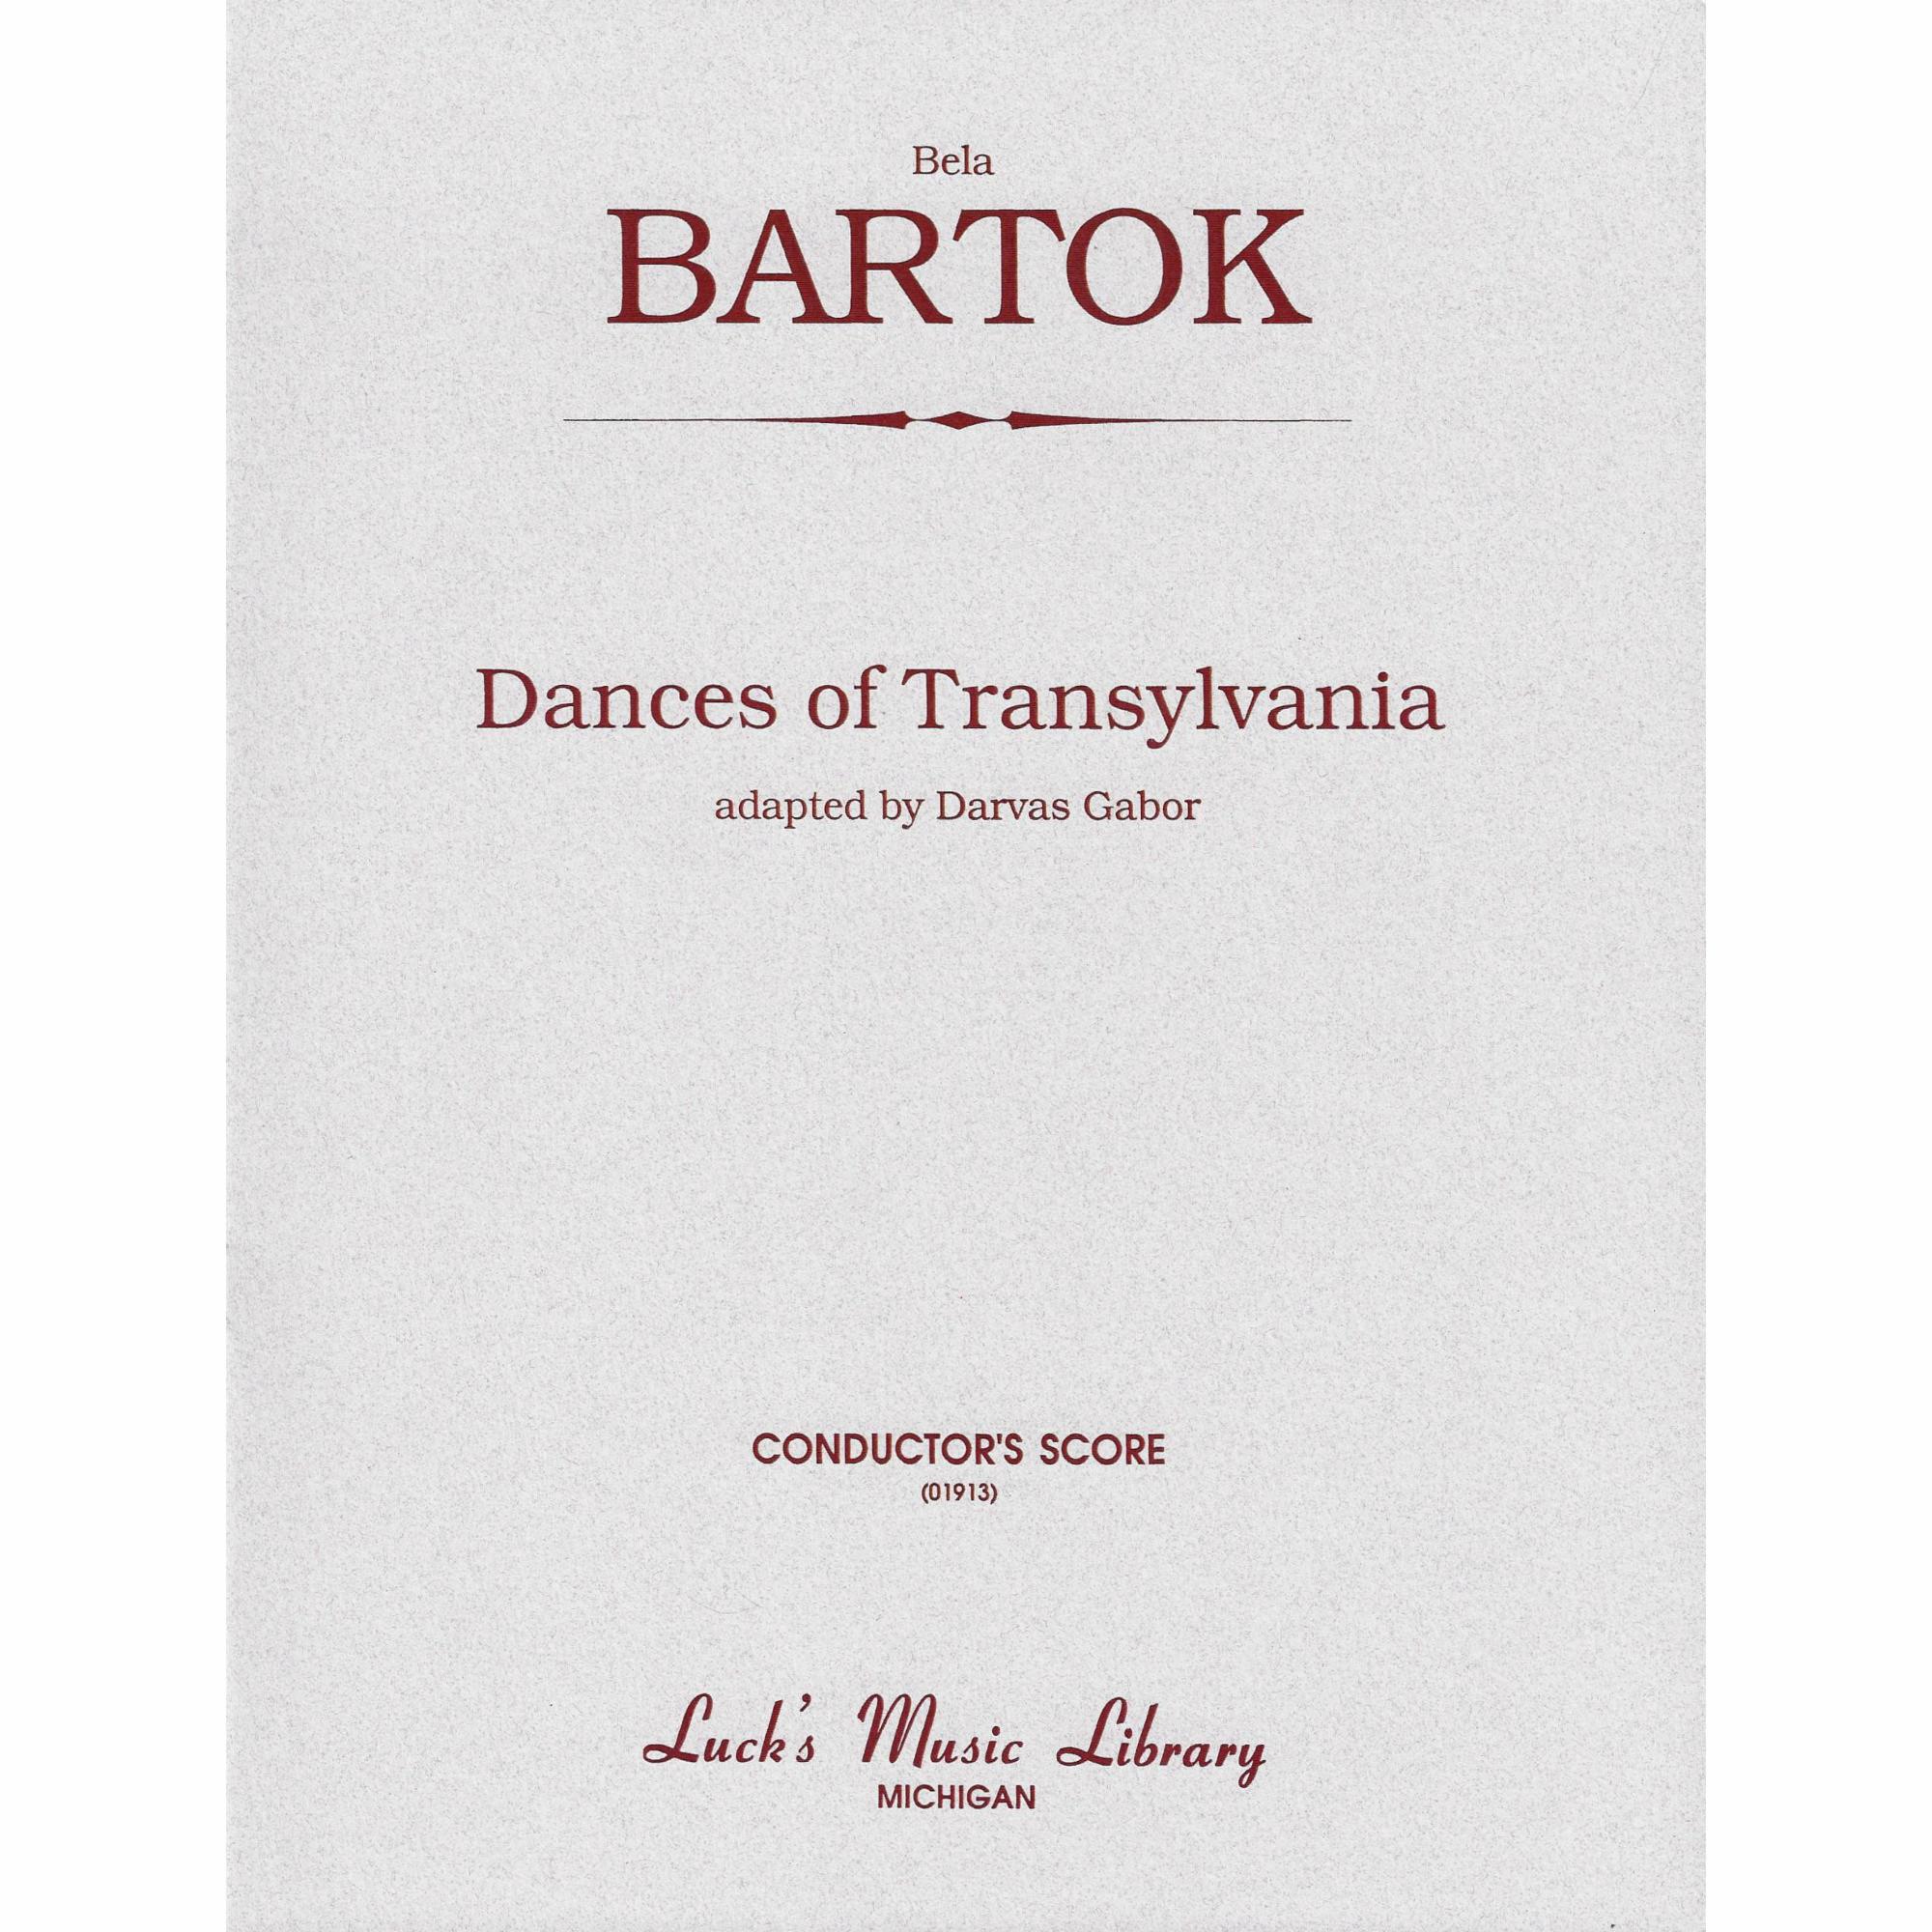 Bartok -- Dances of Transylvania for String Orchestra